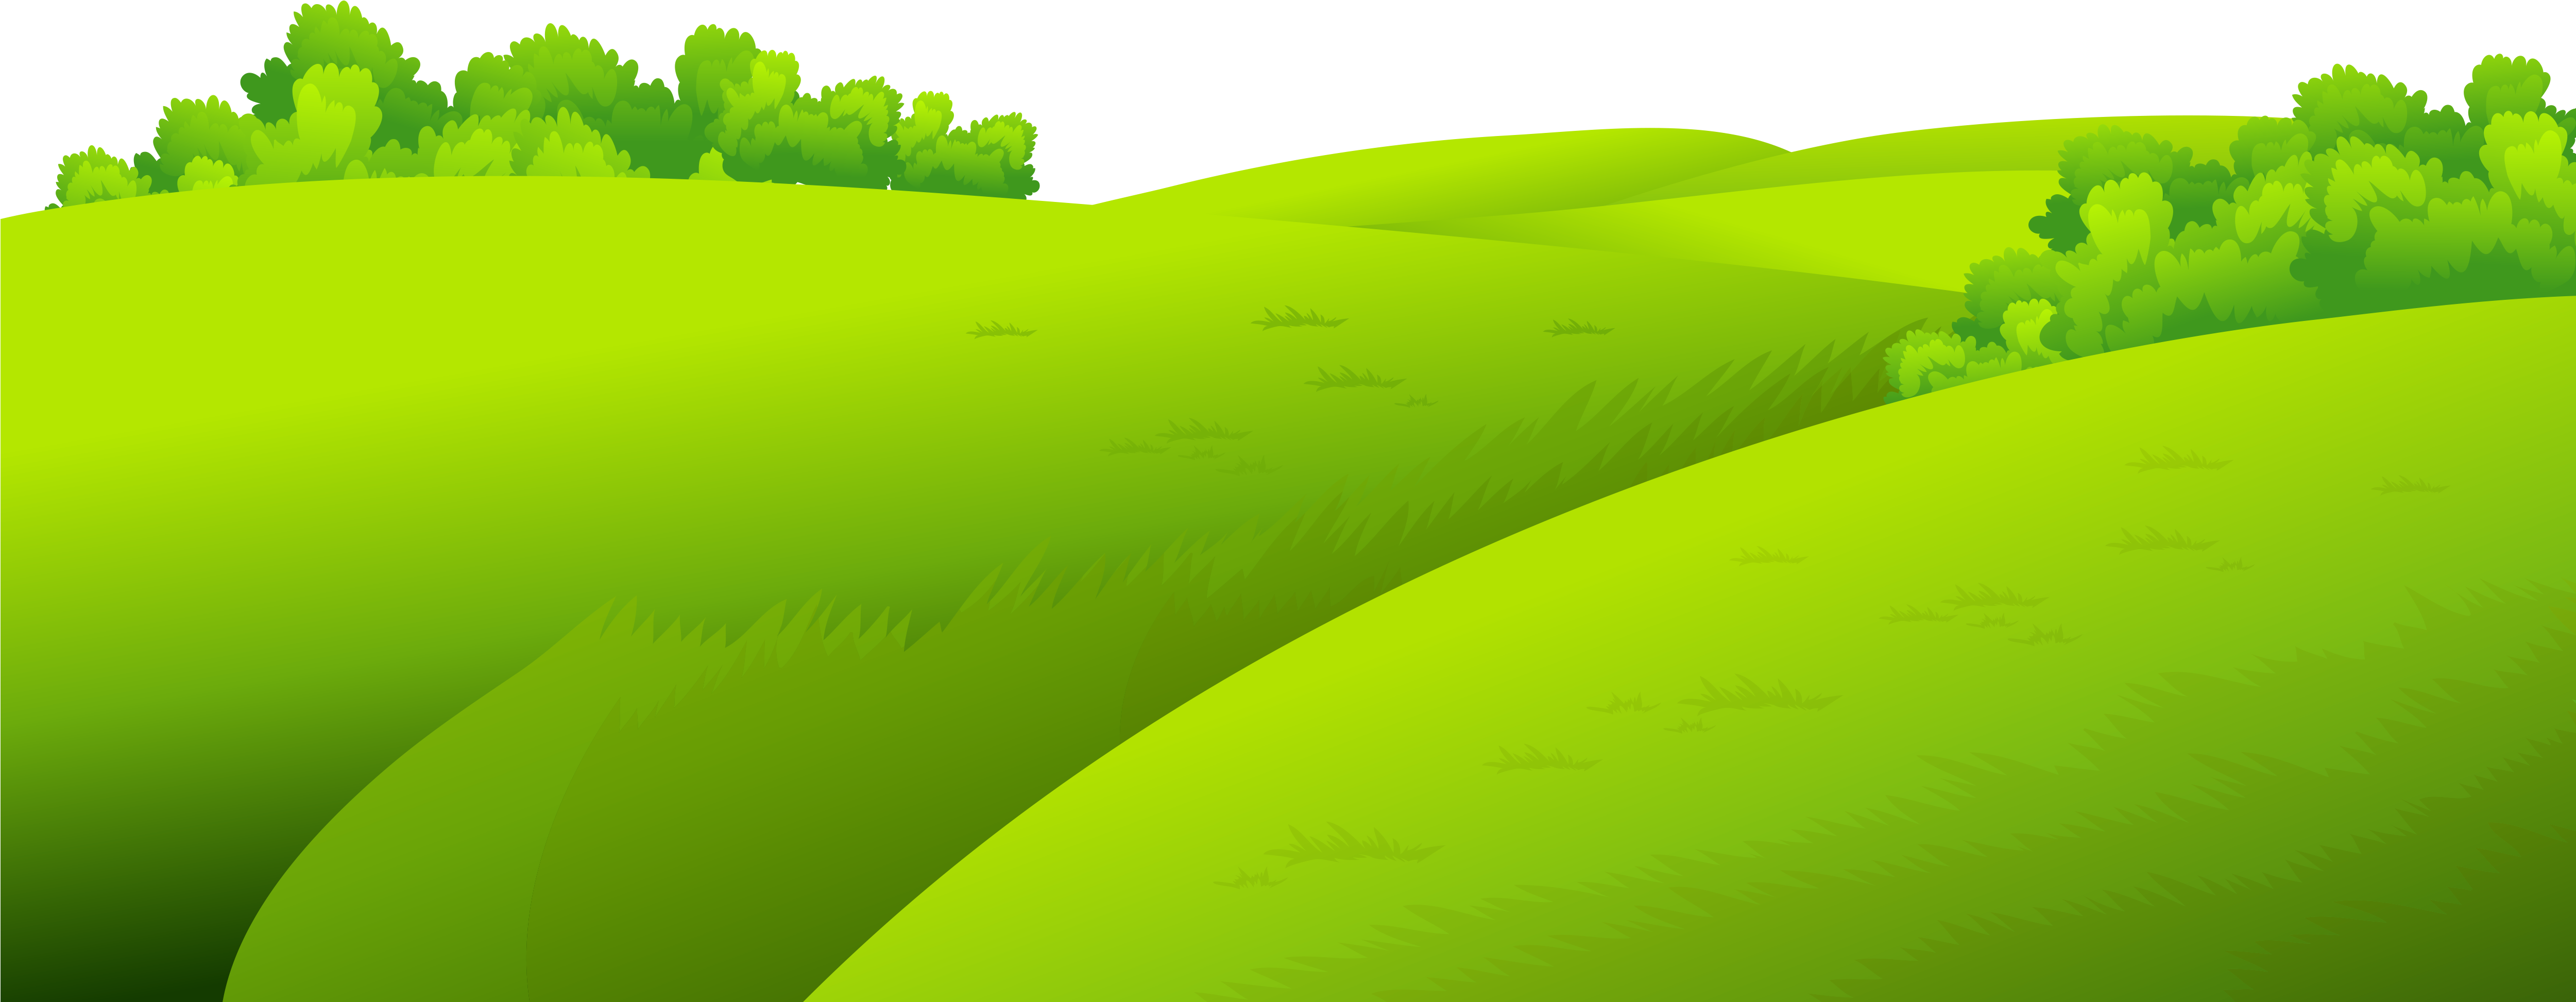 Landscape Grass Field PNG Transparent Image